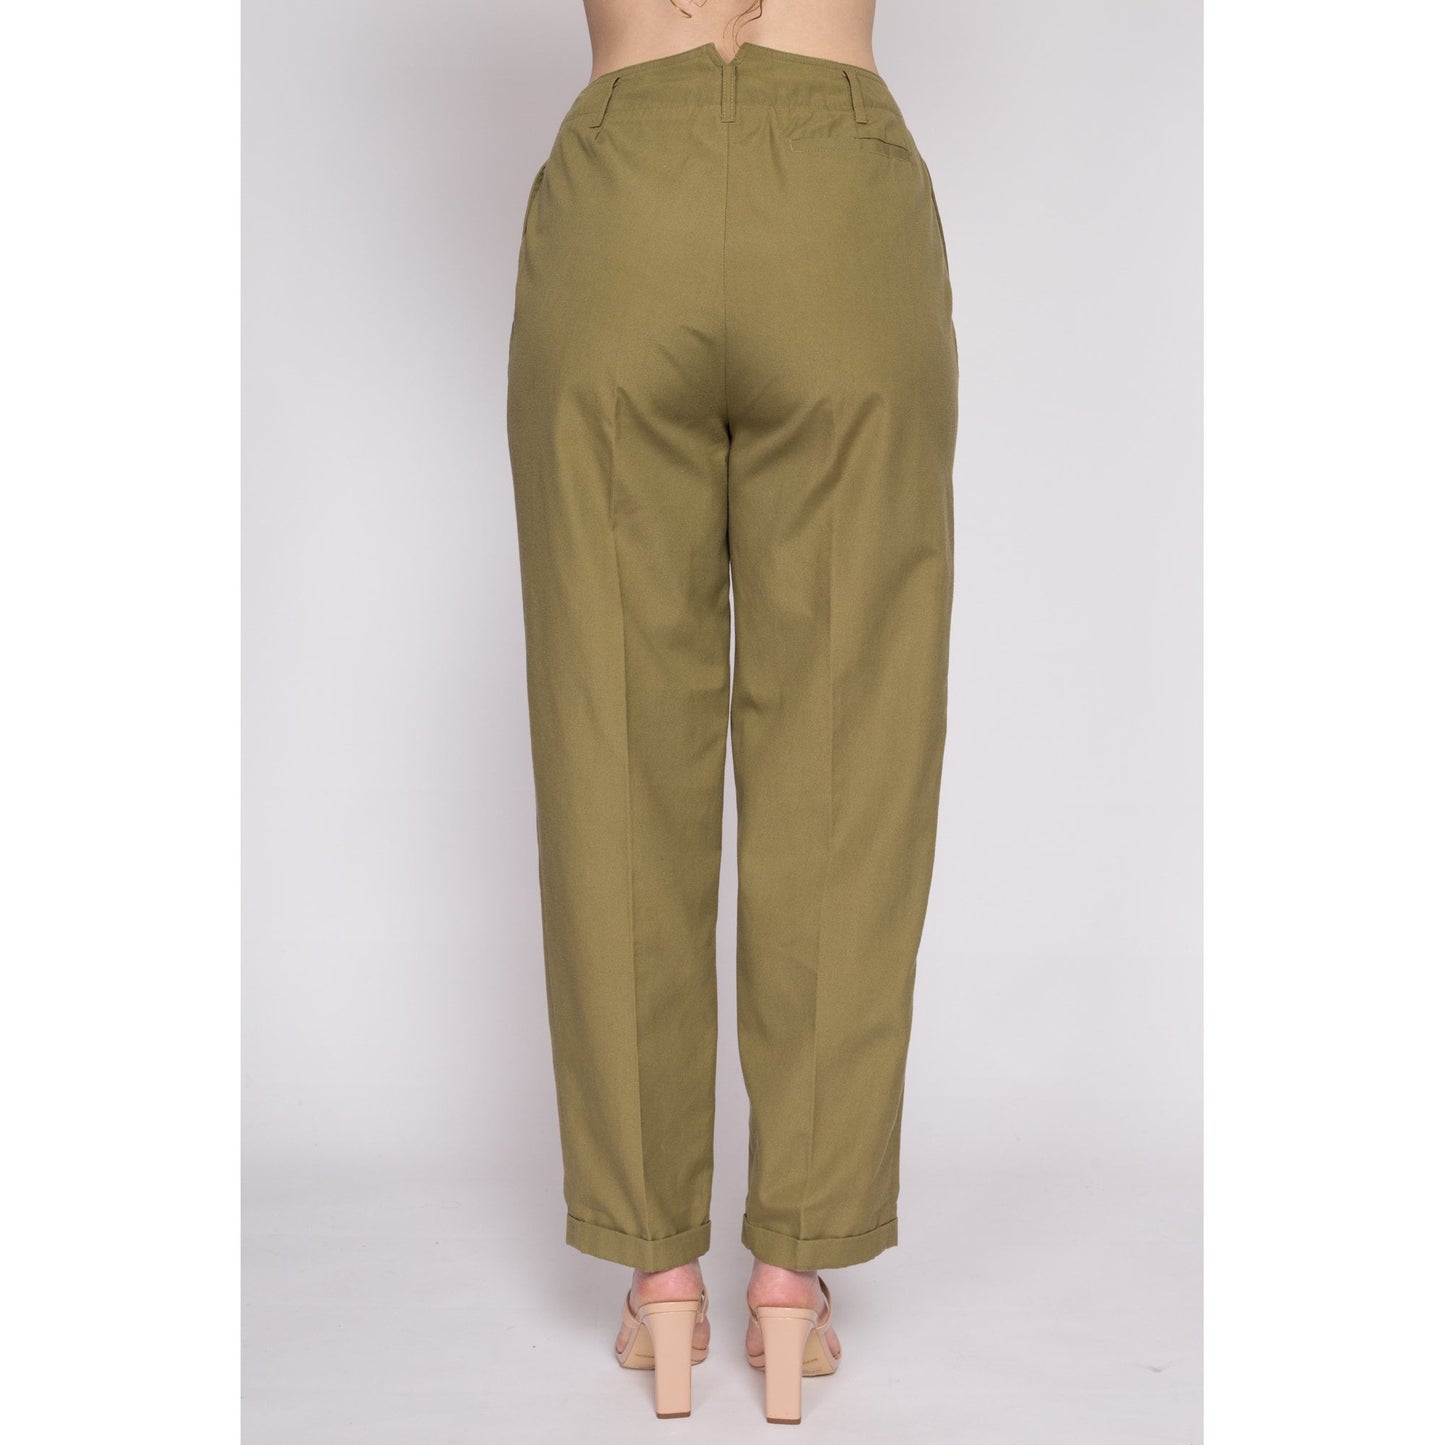 M| 80s Olive High Waisted Trousers - Medium, 28" | Vintage Minimalist Army Green Pleated Tapered Leg Pants